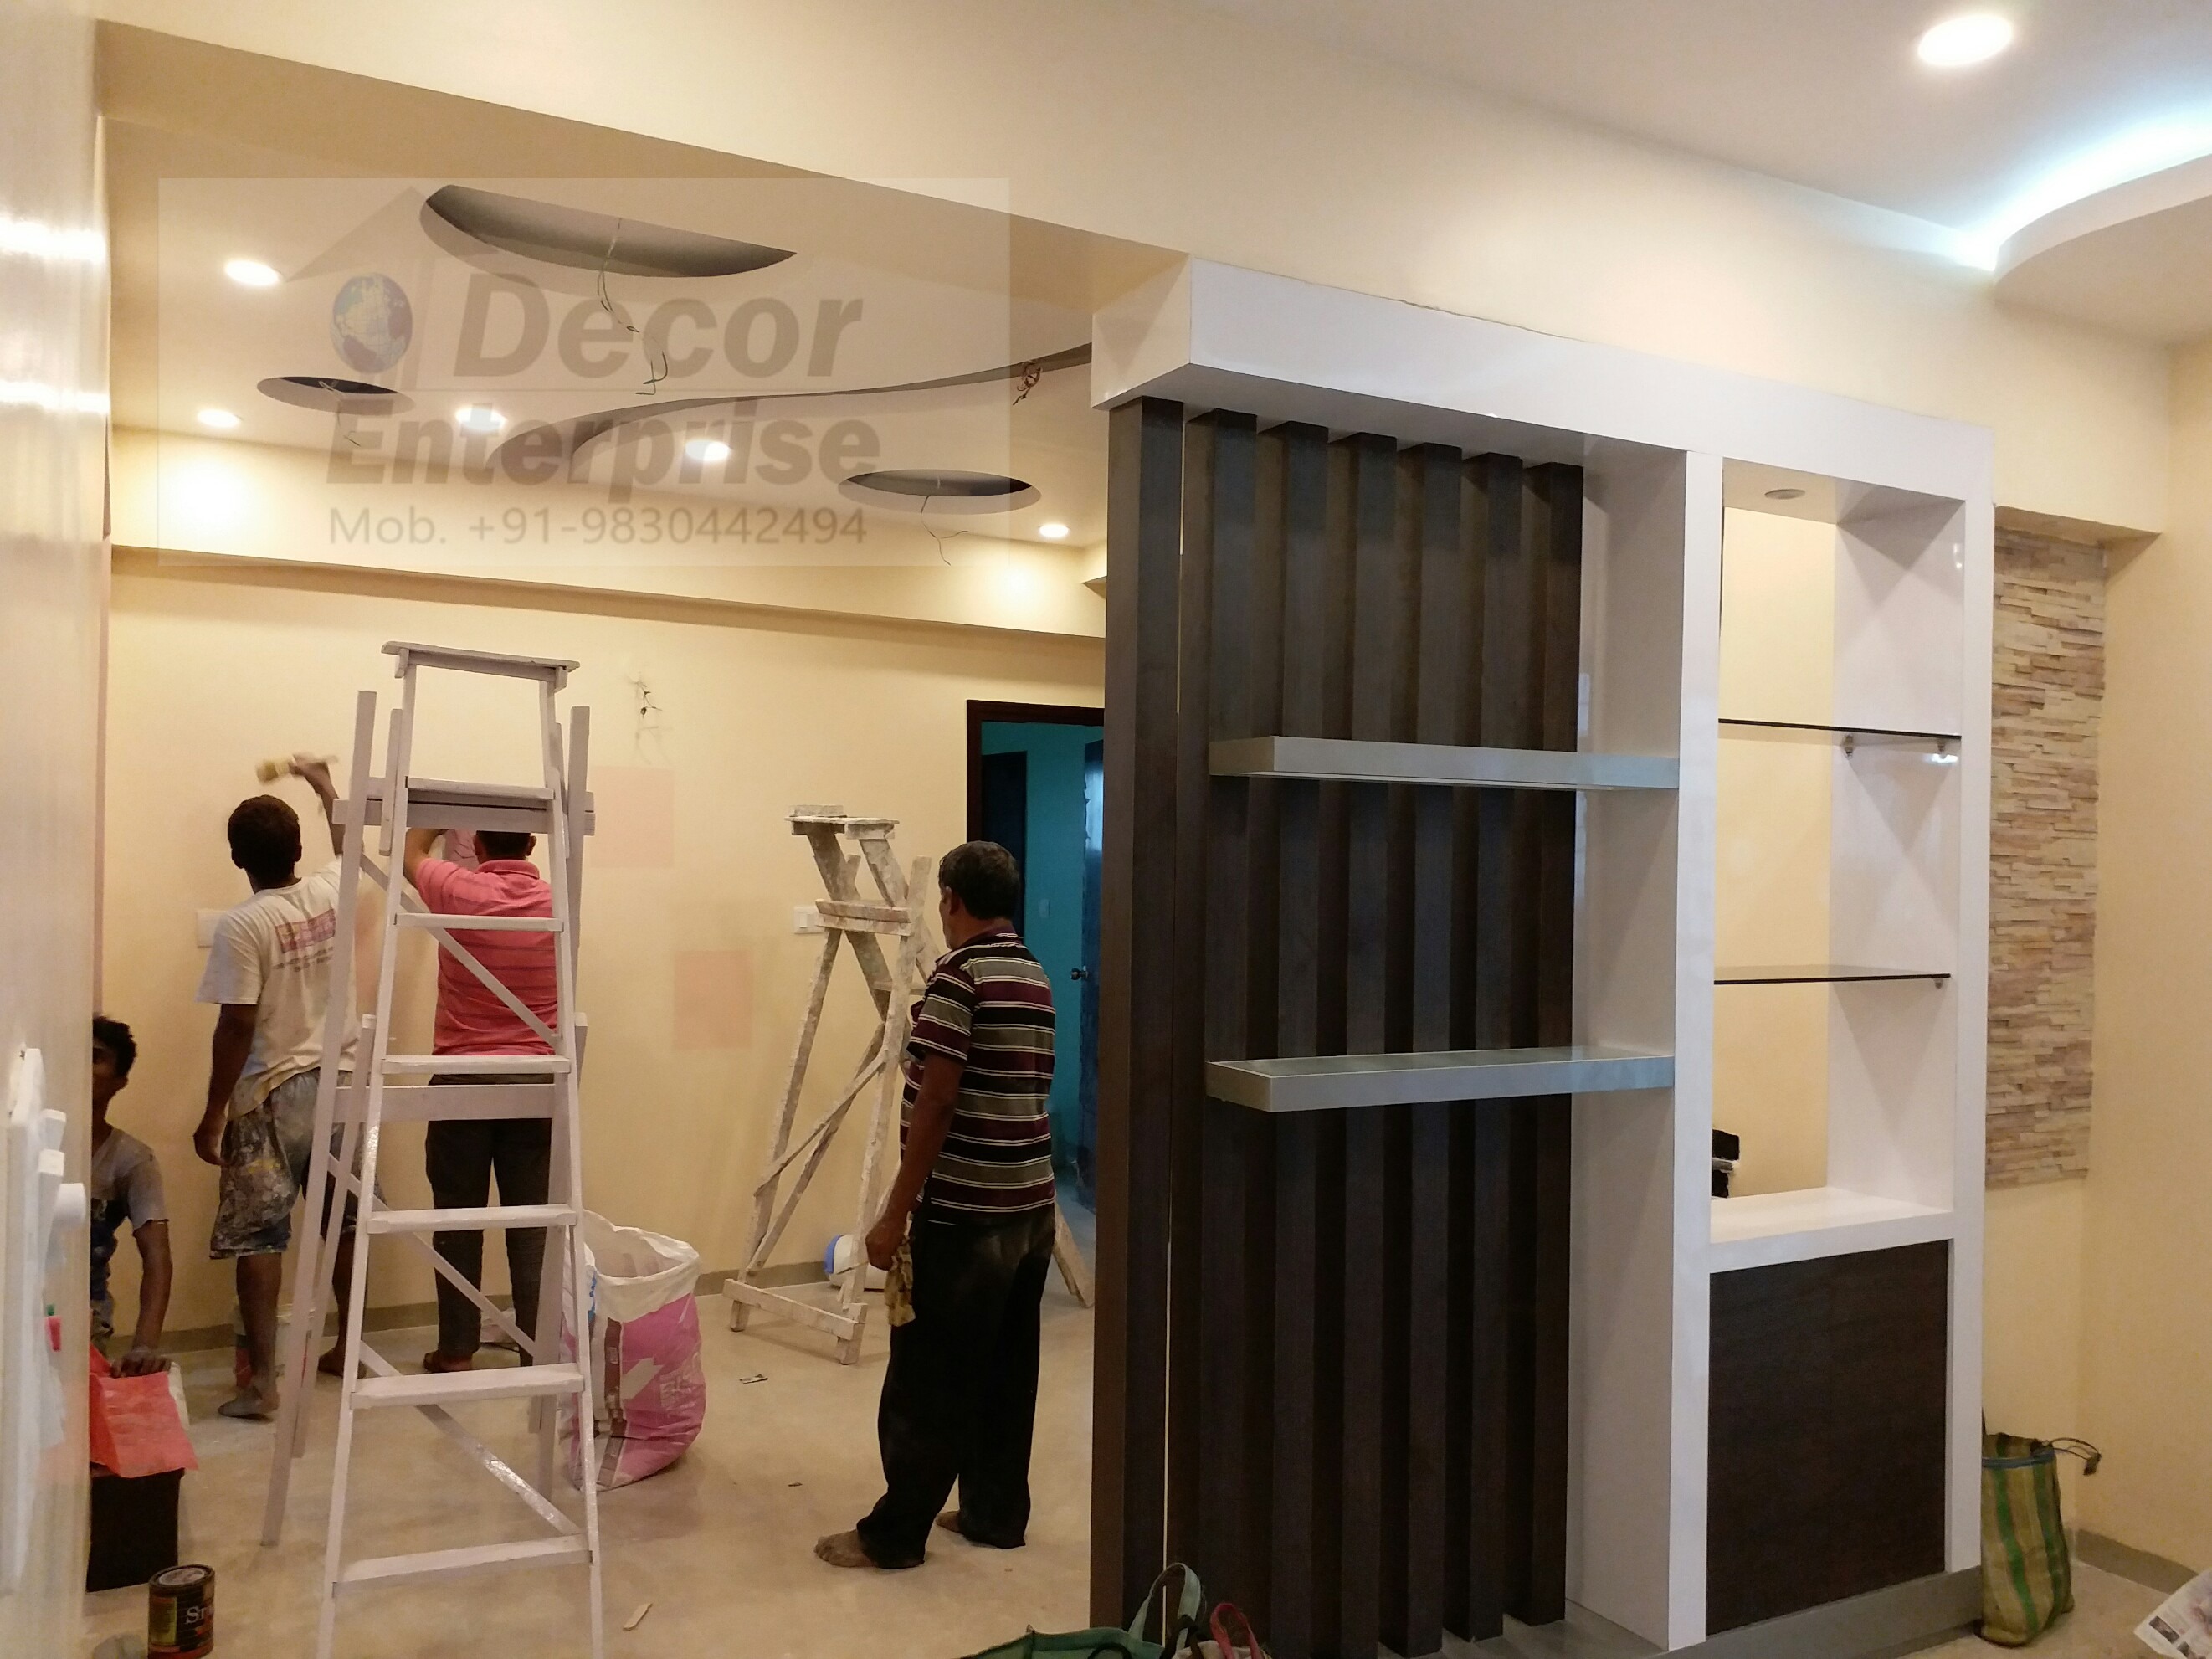 Projects - False Ceiling Contractors in Kolkata | Gypsum ...